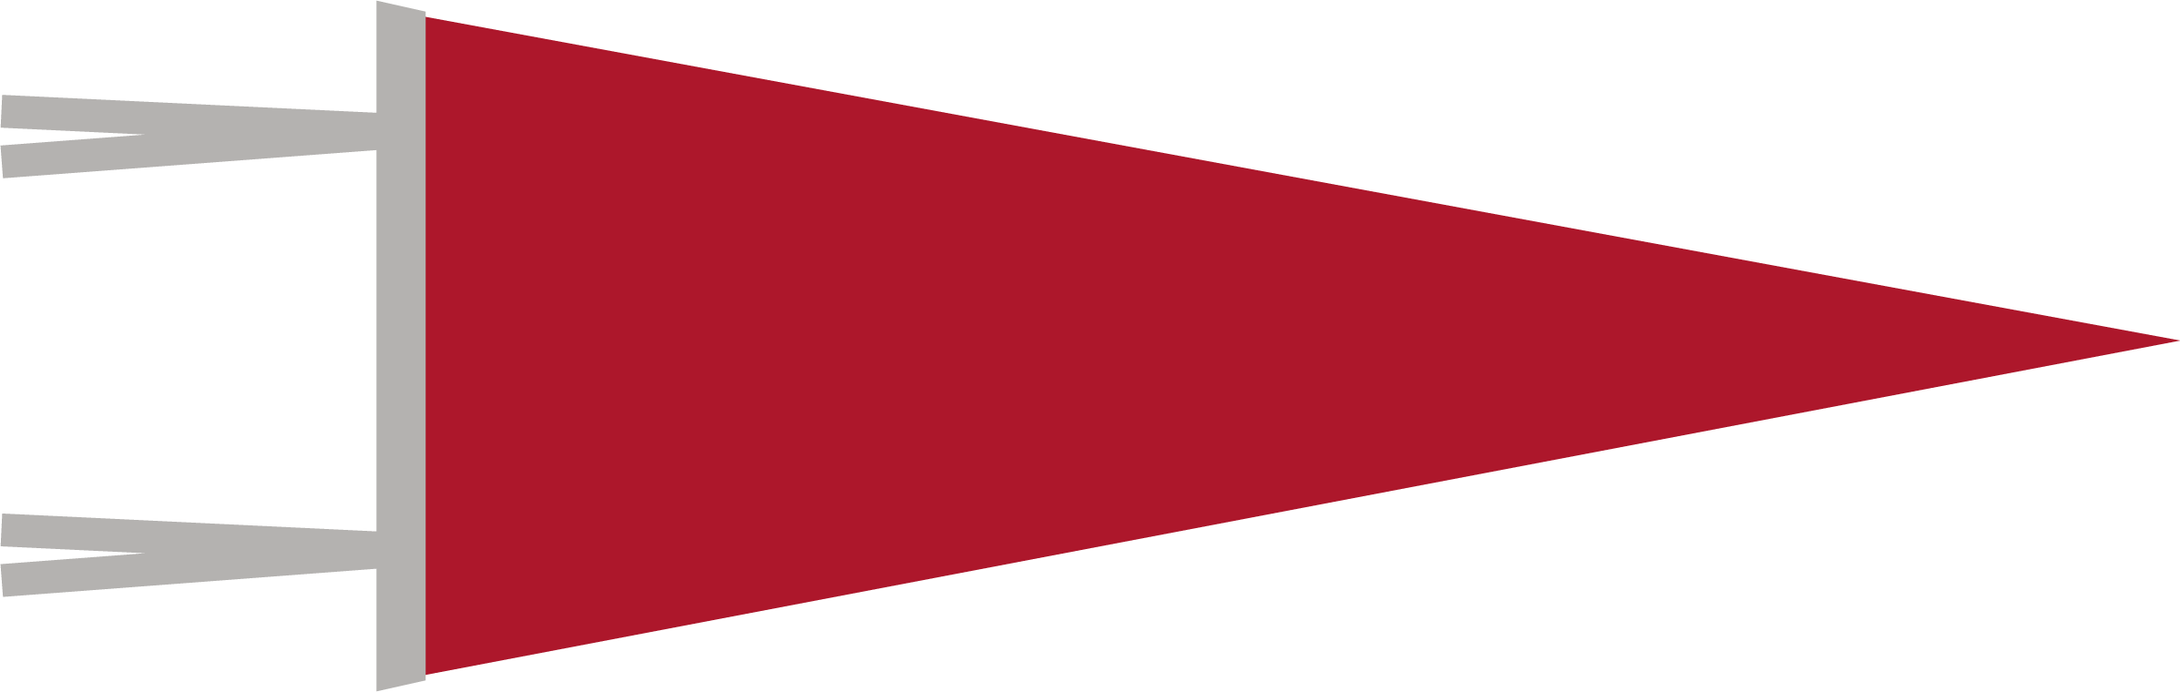 Red / Heather Grey Blank Pennant Flag